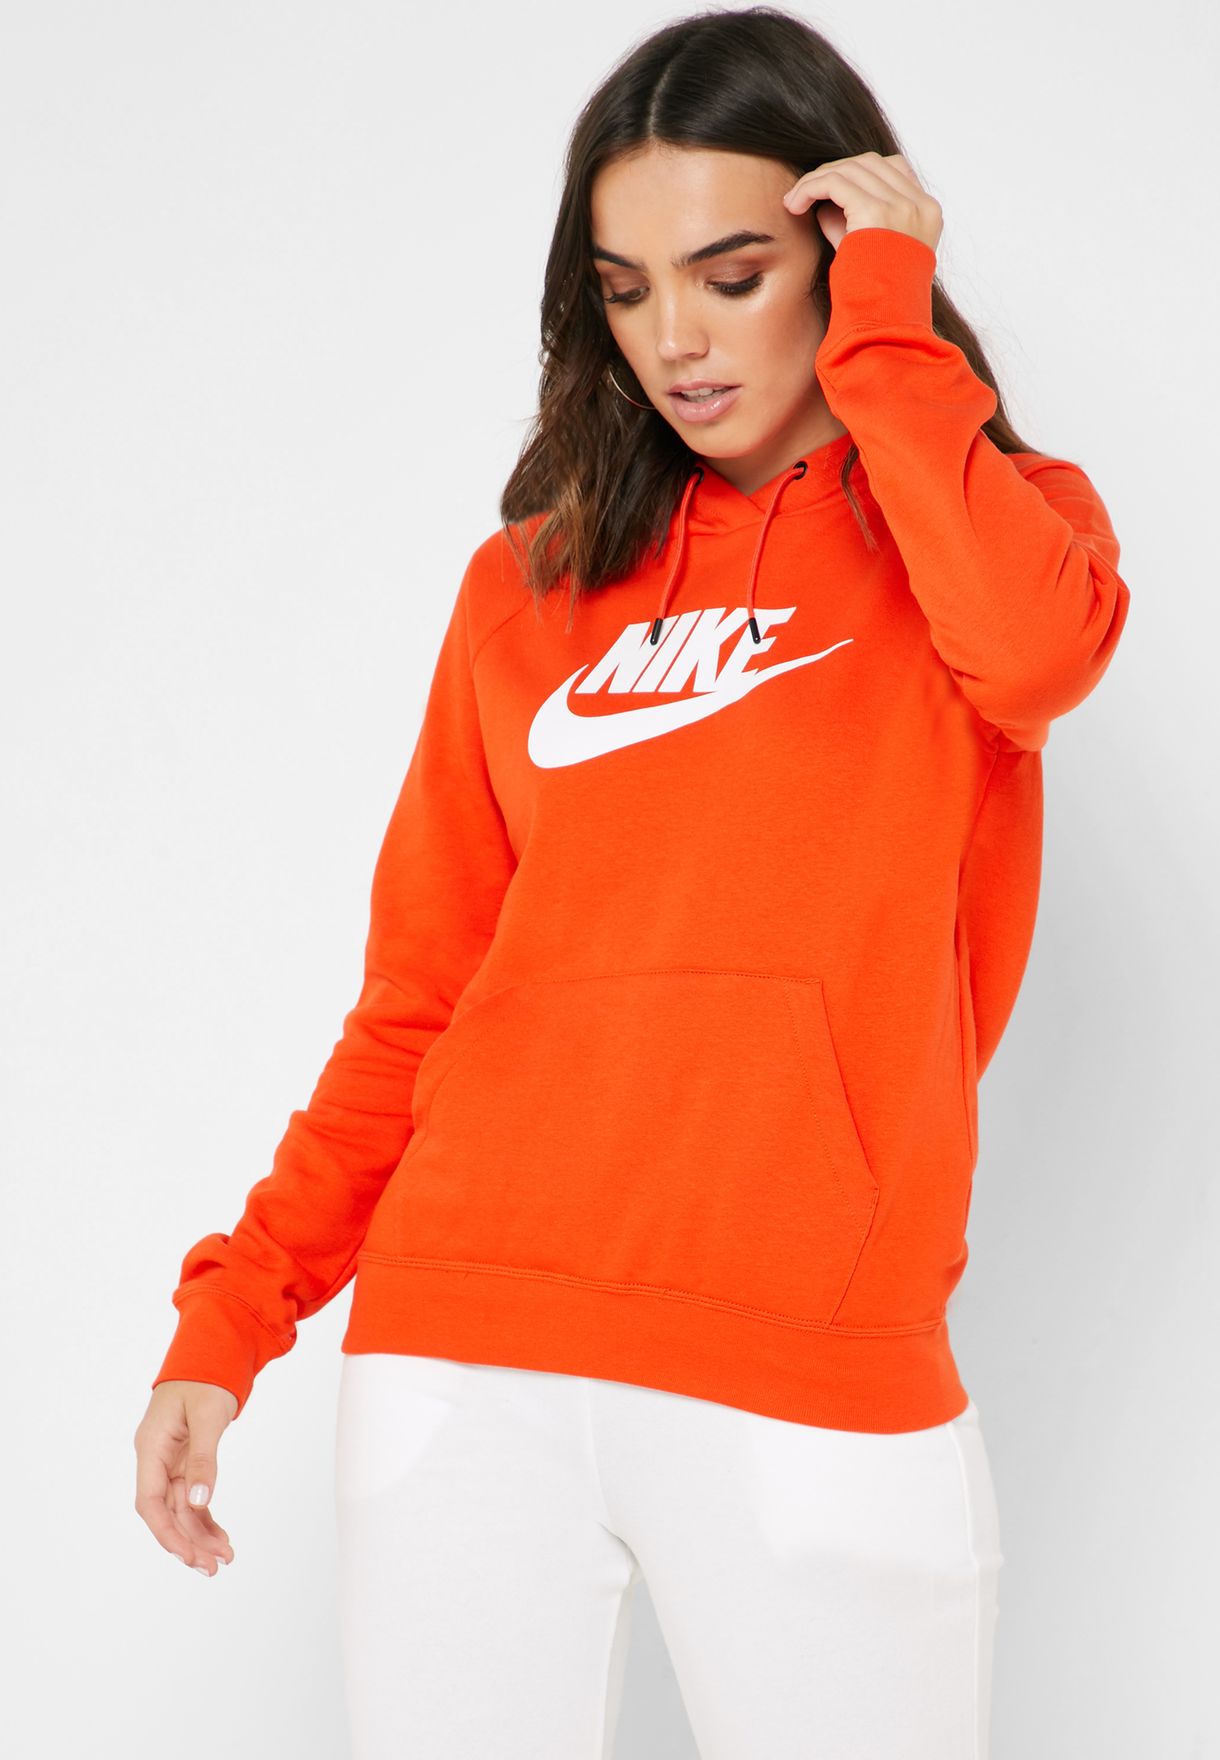 nike orange women's sweatshirt